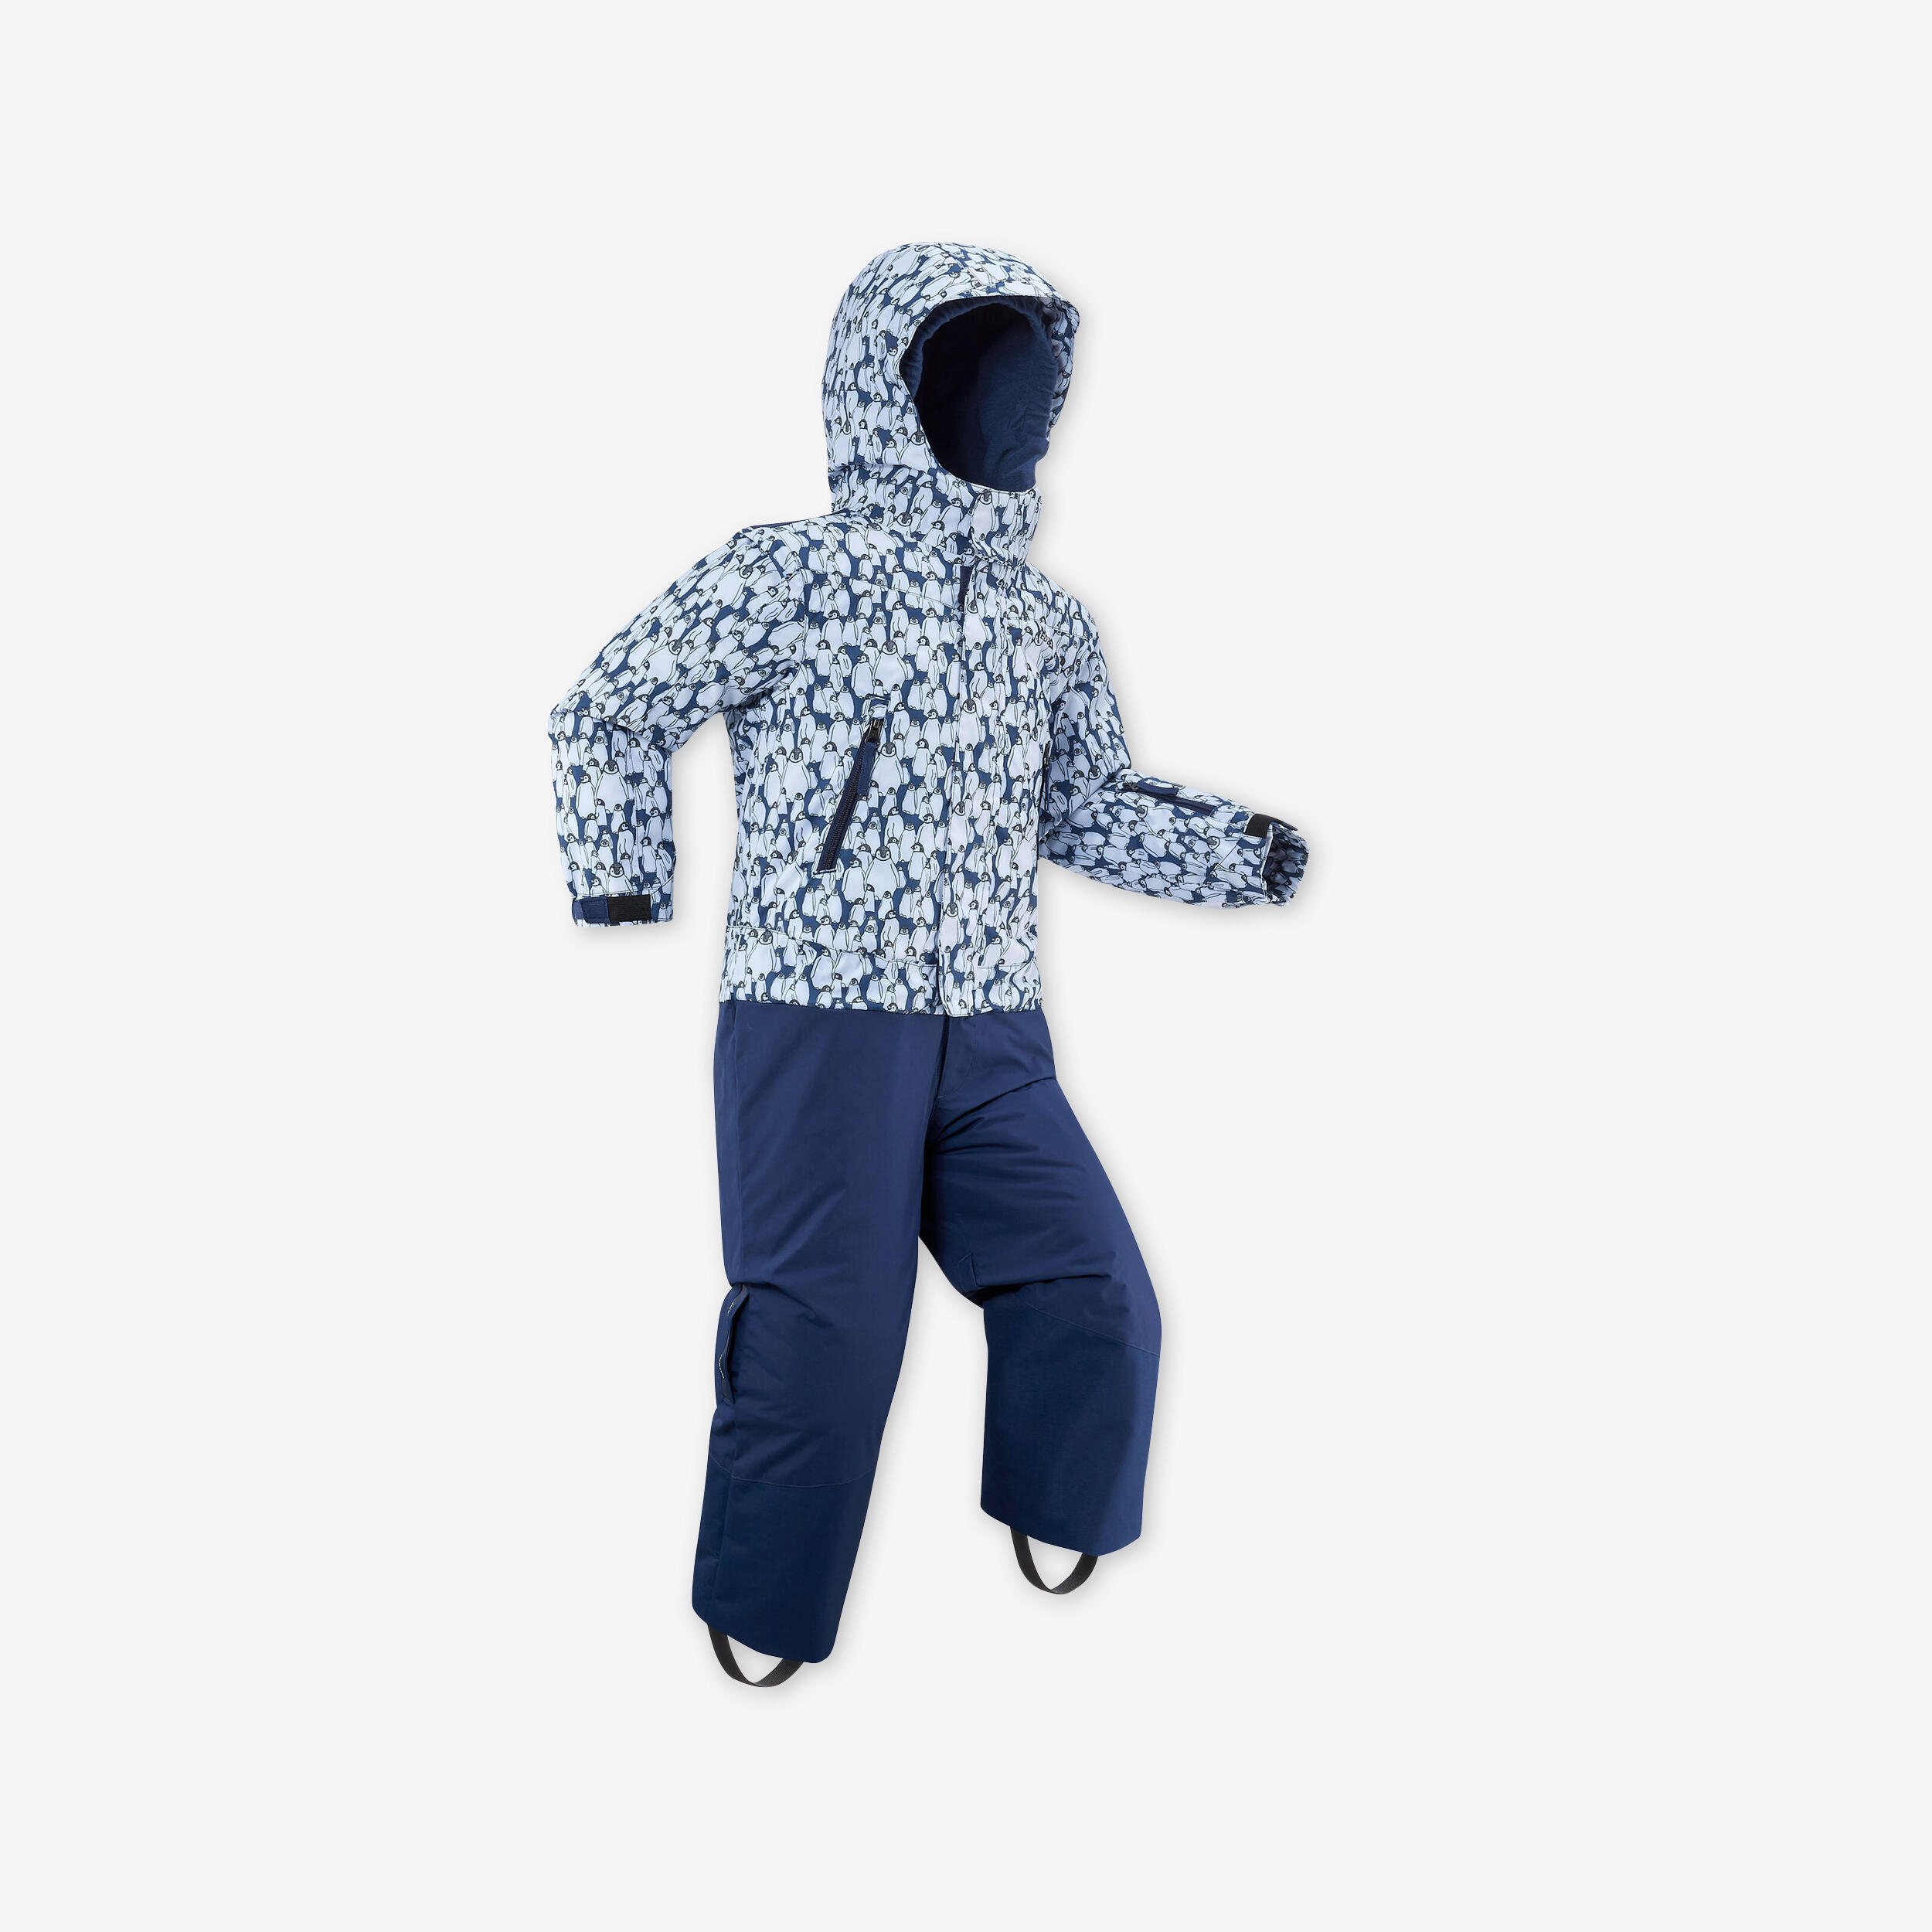 WEDZE Kids’ Warm and Waterproof Ski Suit PNF 500 - Penguins